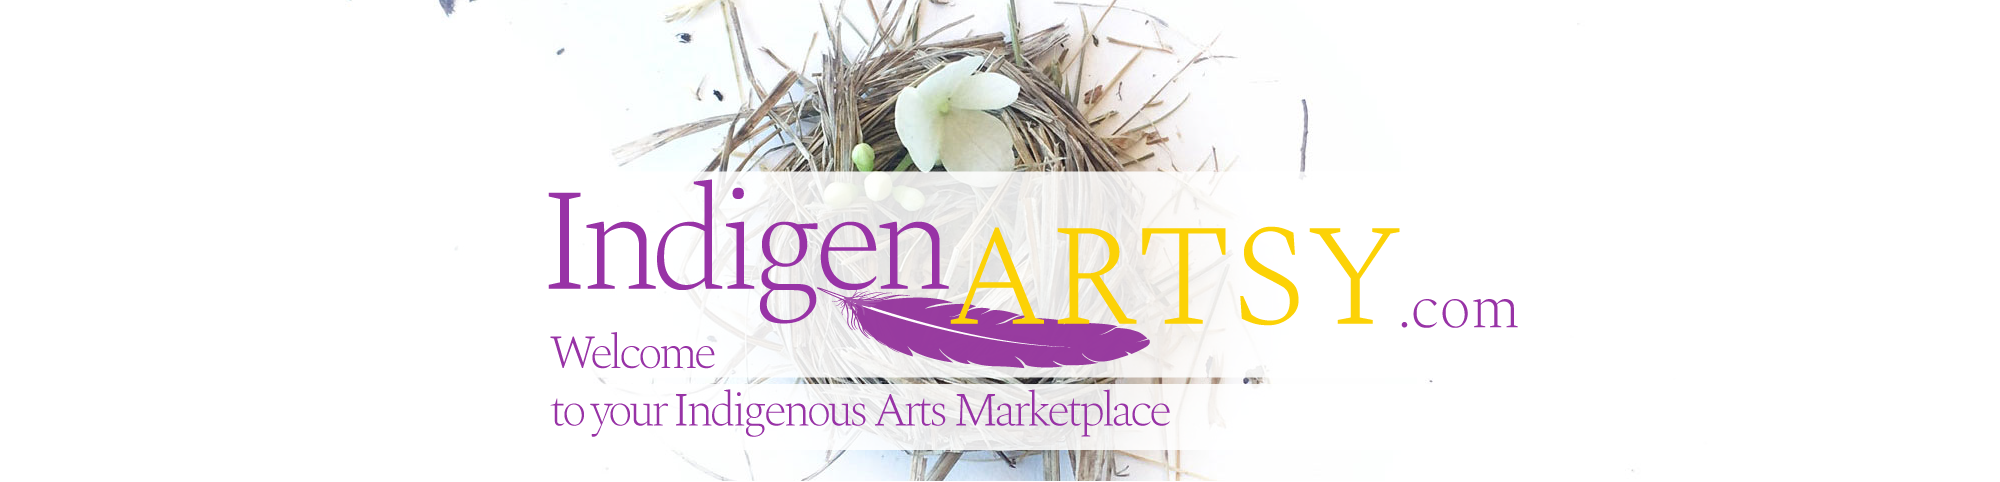 Indigenartsy, marketplace, indigenous arts, native arts, first nations art